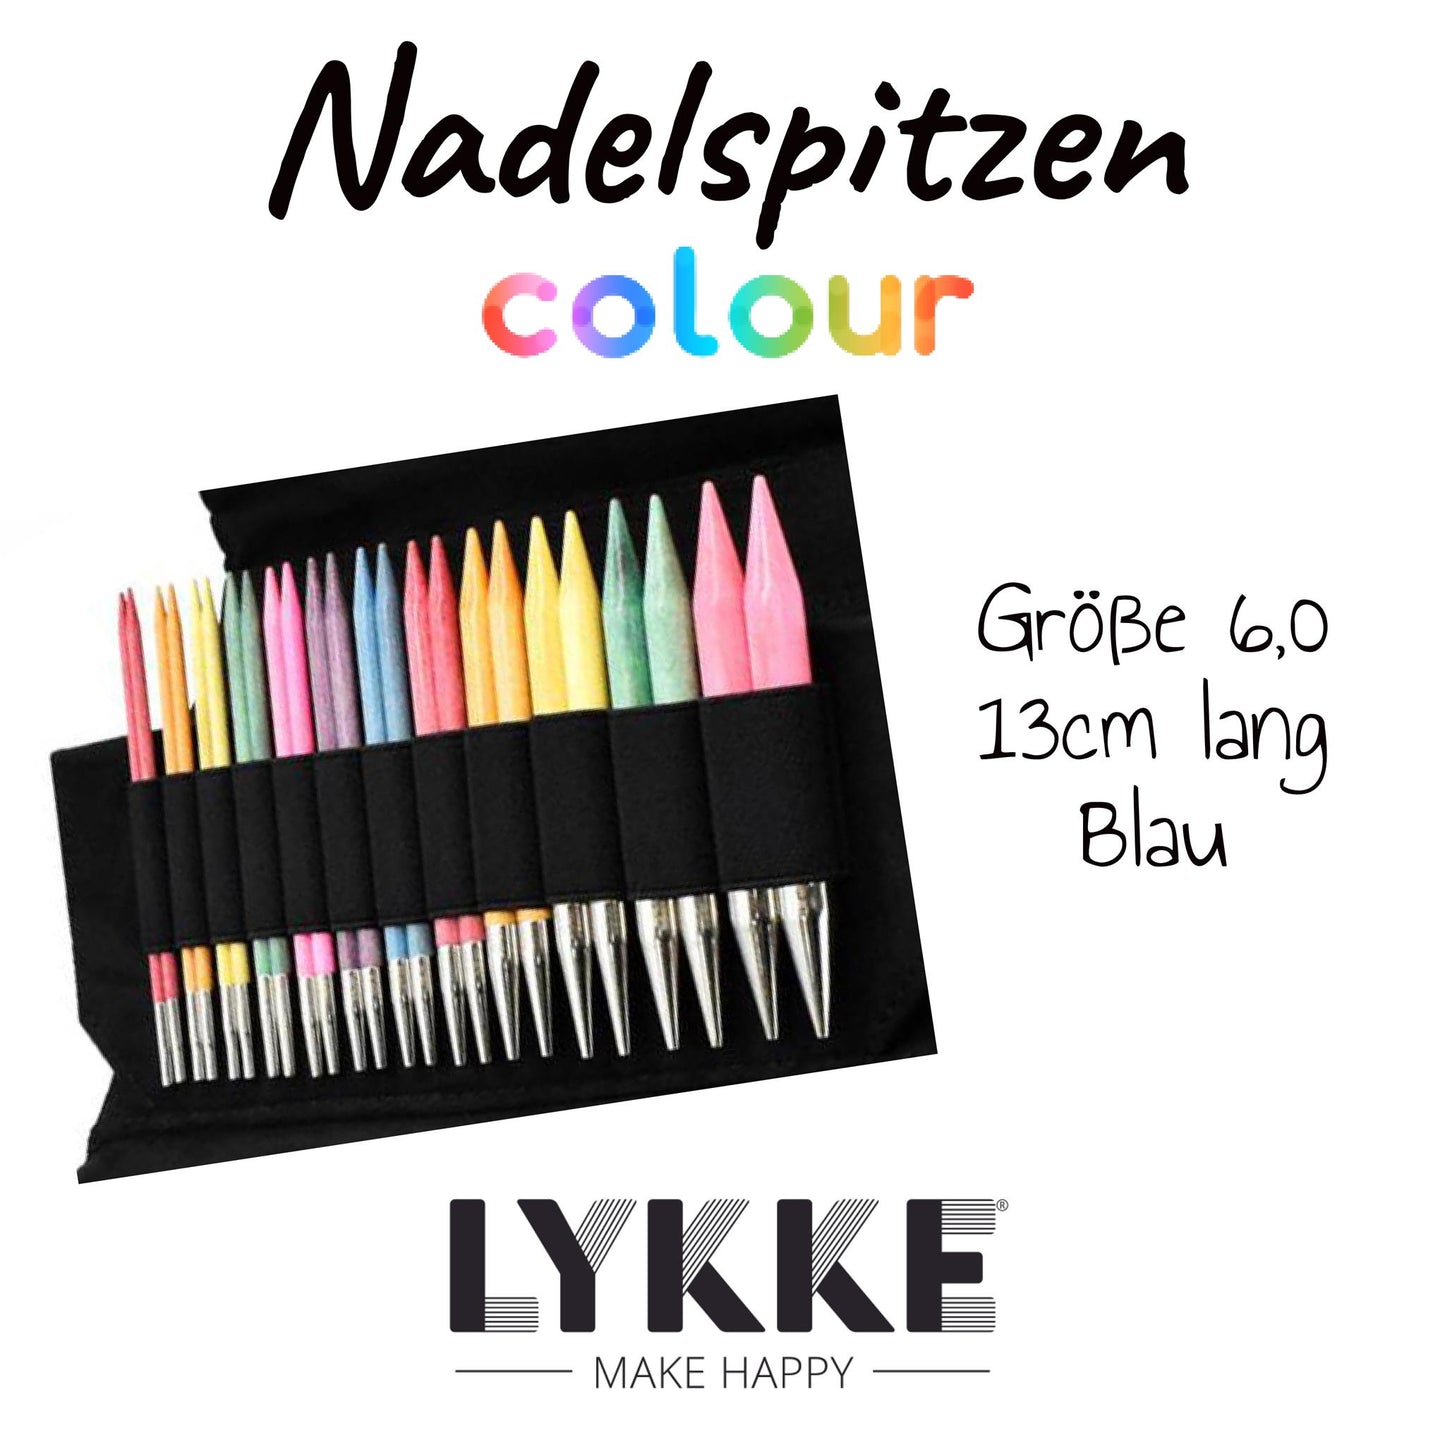 Lykke Stricknadelspitze Colour, 6,0, Birkenholz farbig, 15005200